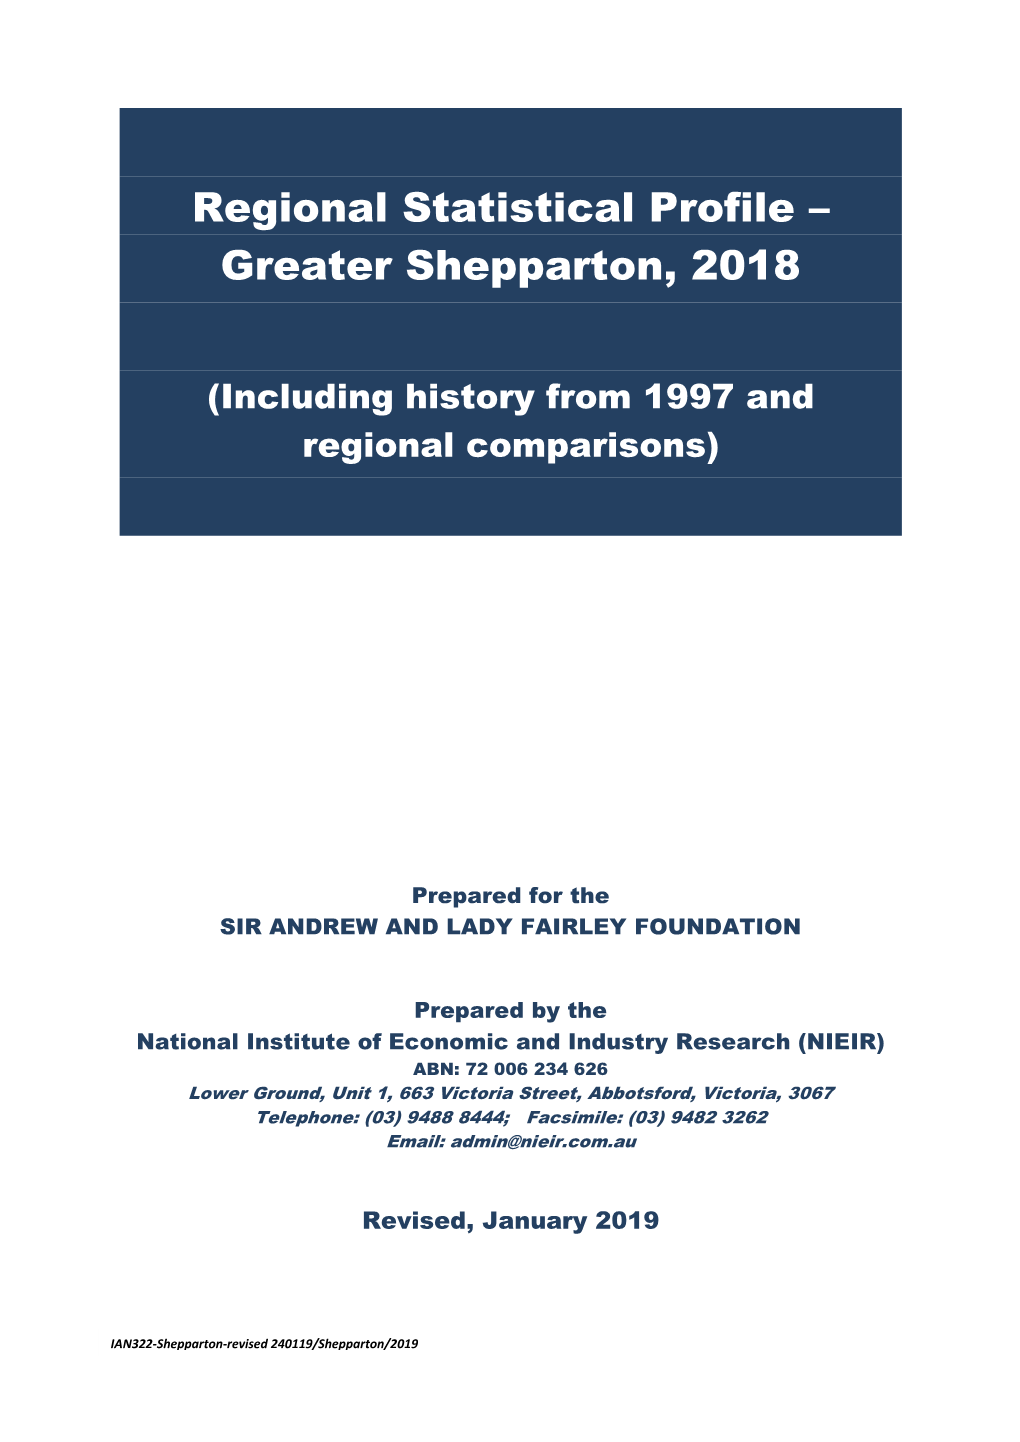 Regional Statistical Profile – Greater Shepparton, 2018